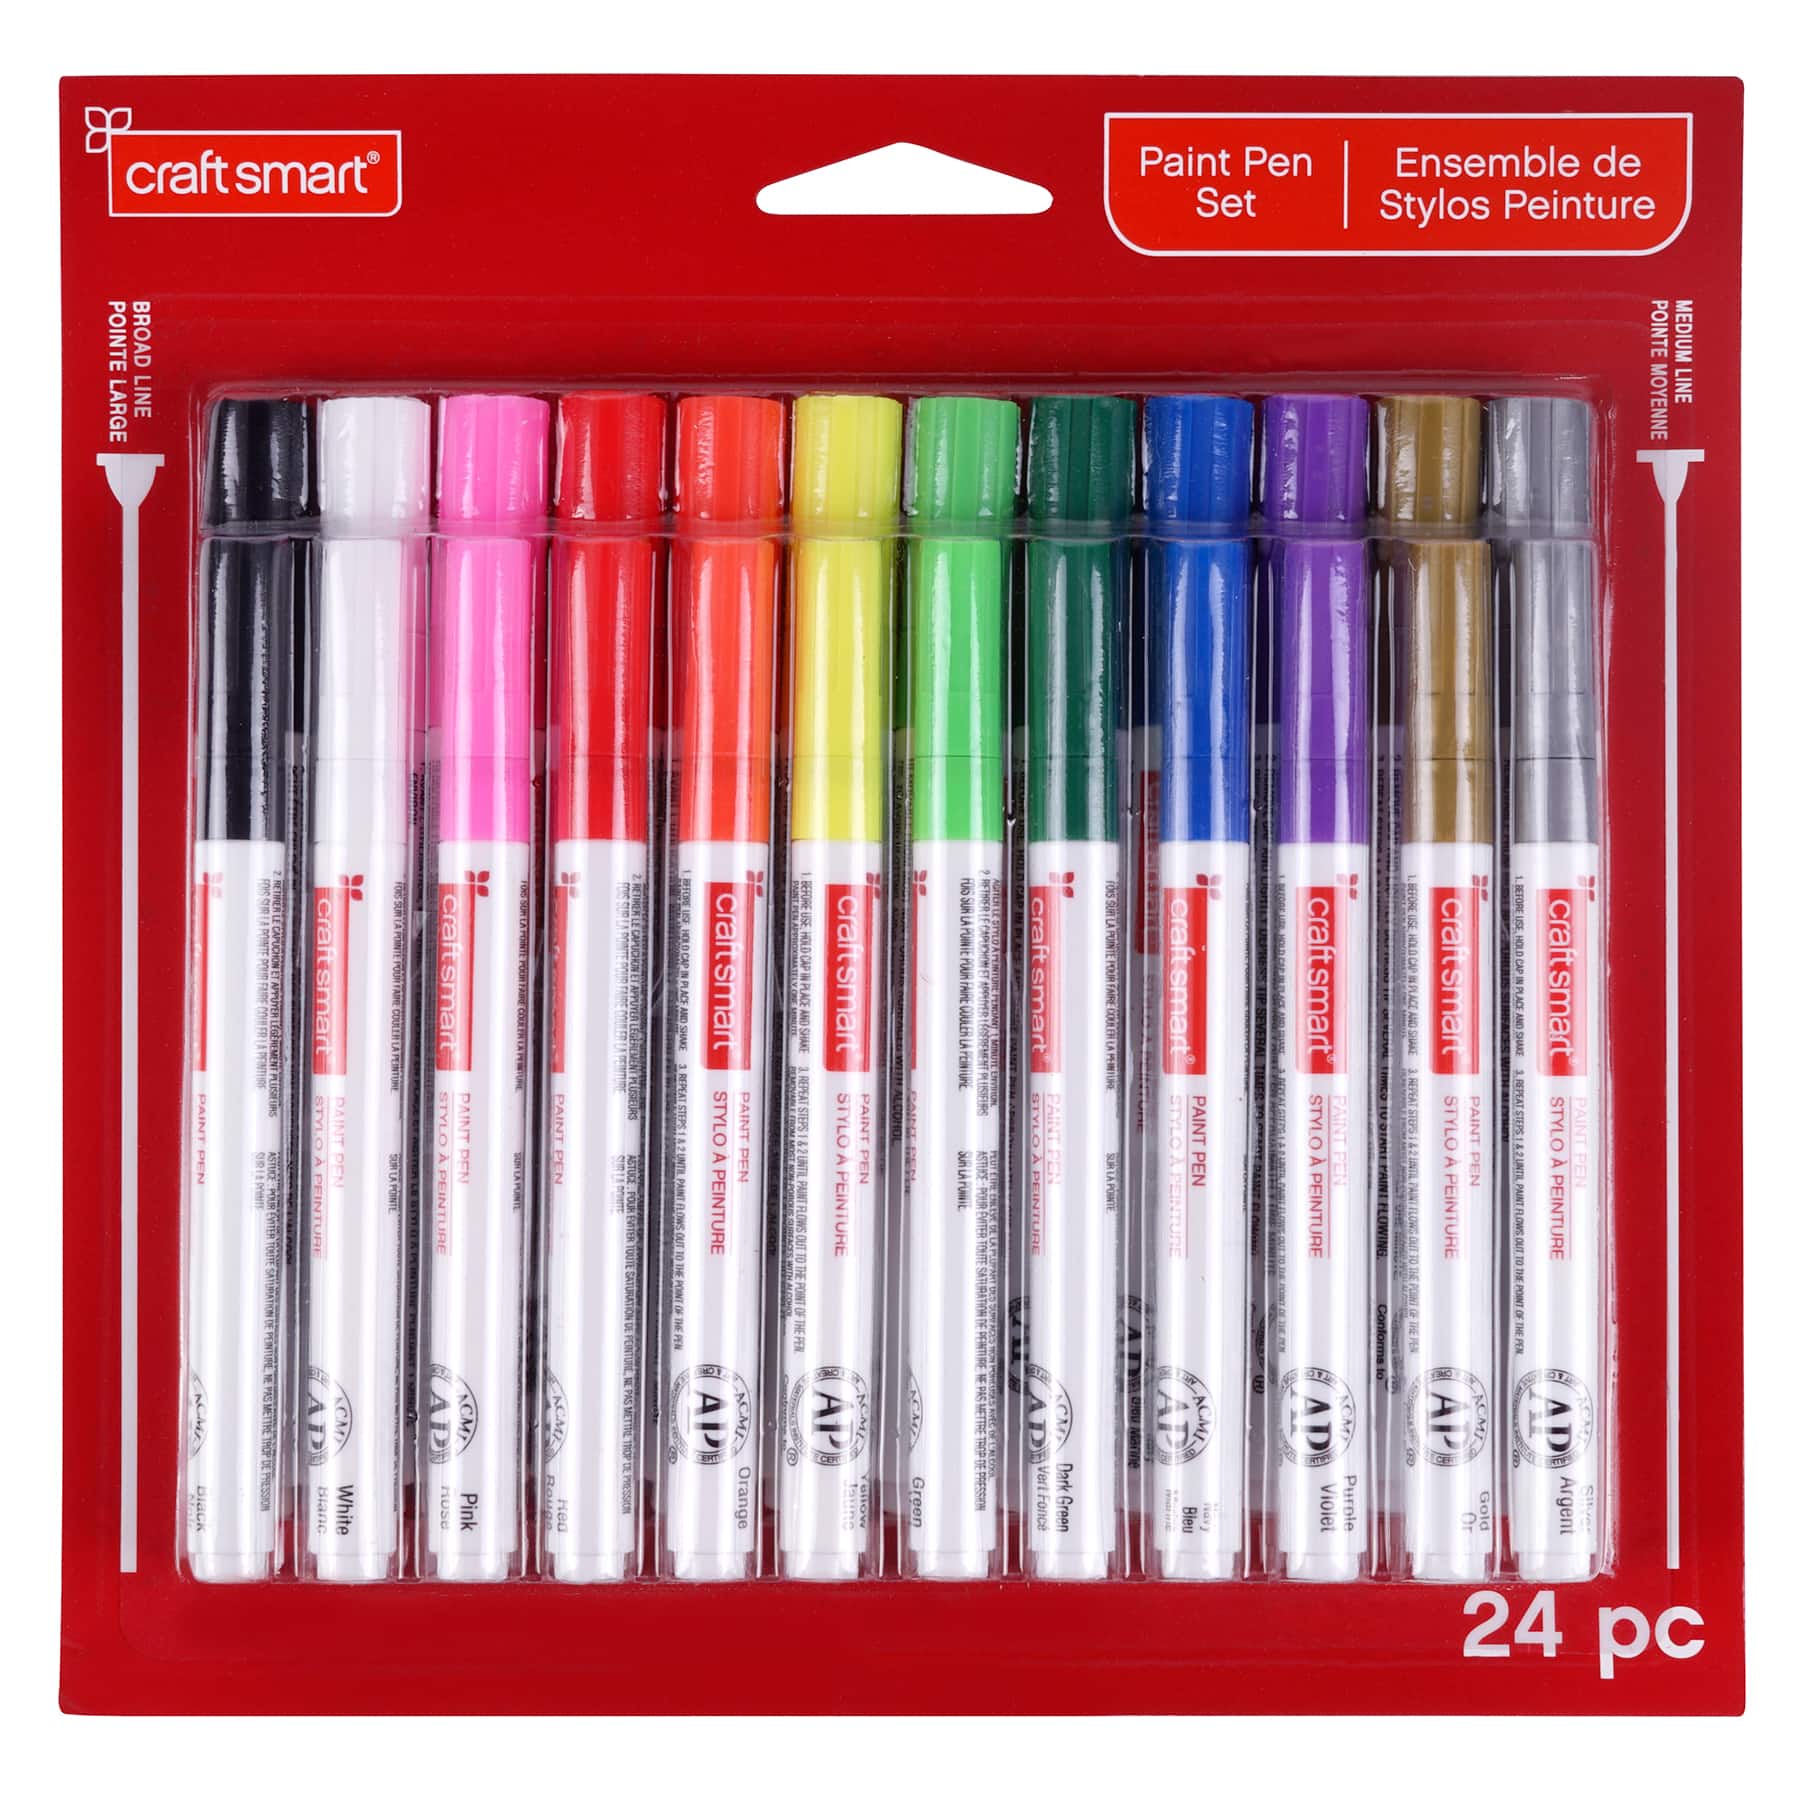 Craftsmart 621361 Multi Surface Premium Oil Based Paint Pens Set